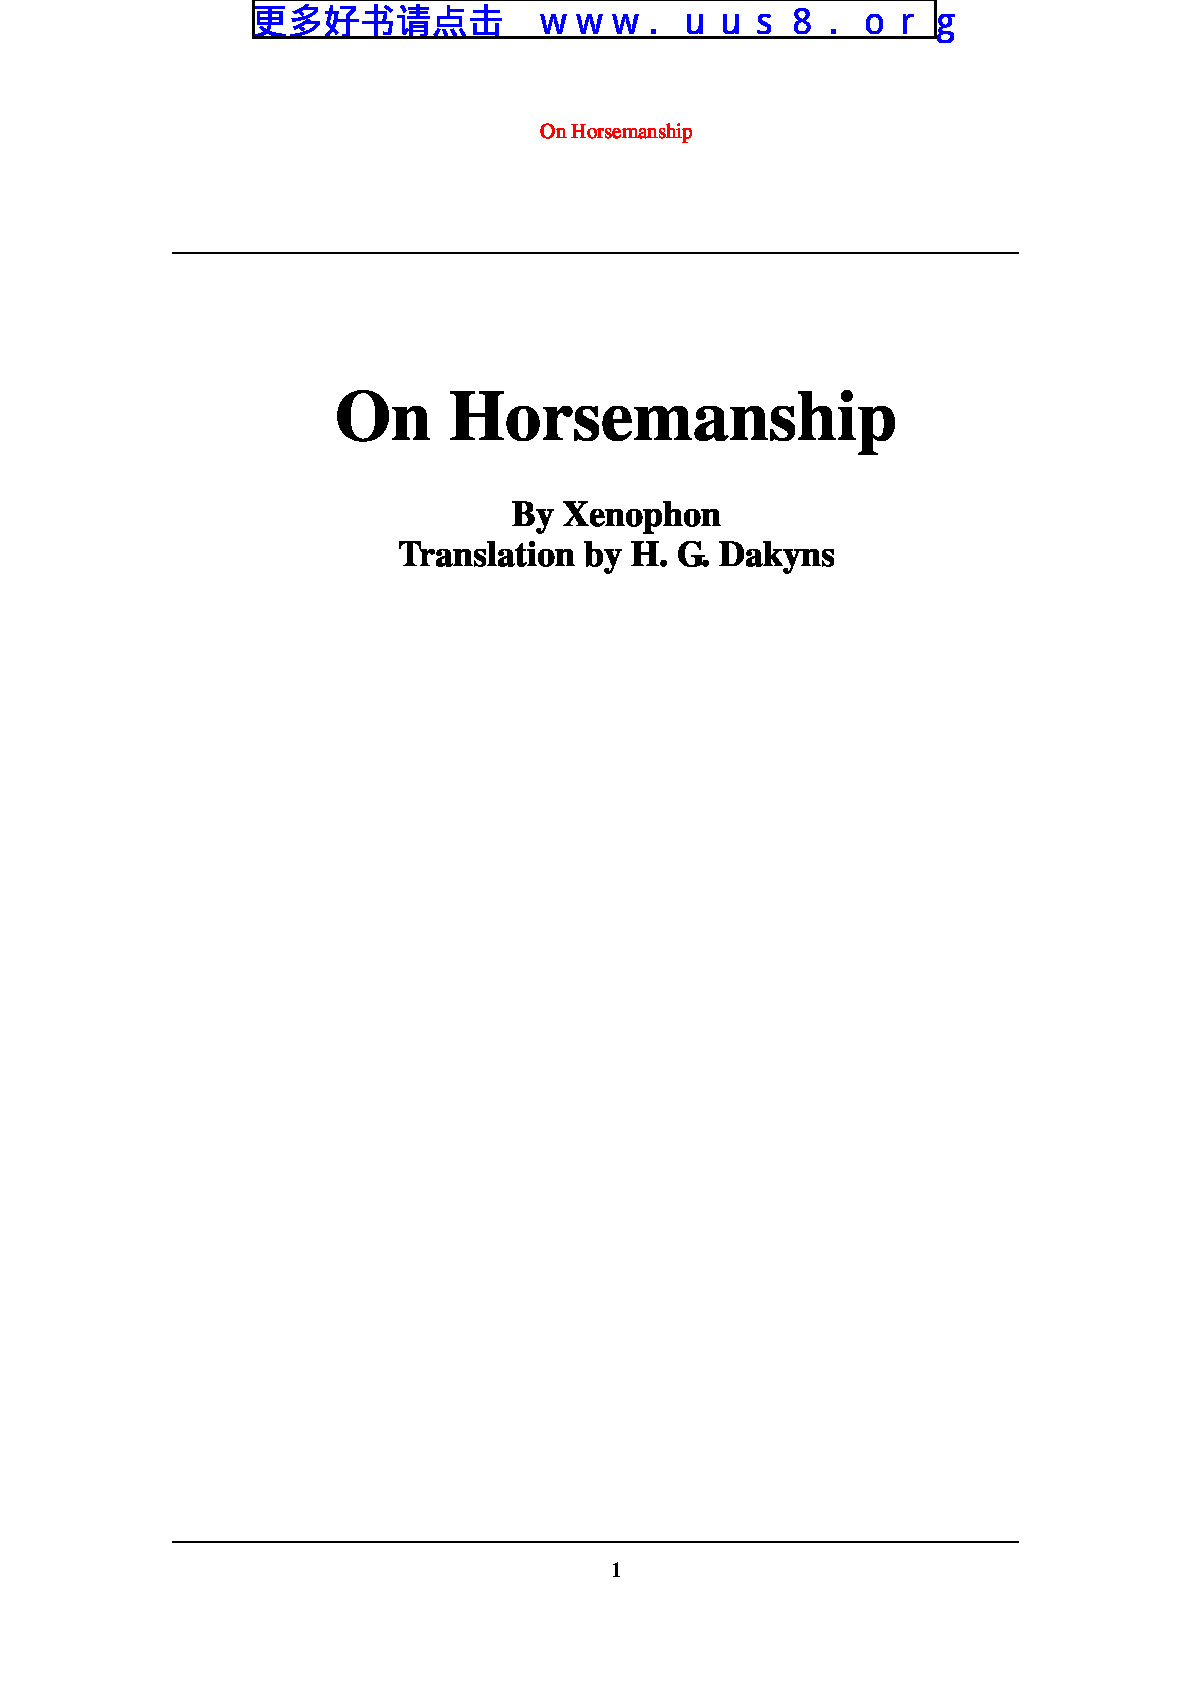 On_Horsemanship(骑马术) – 副本